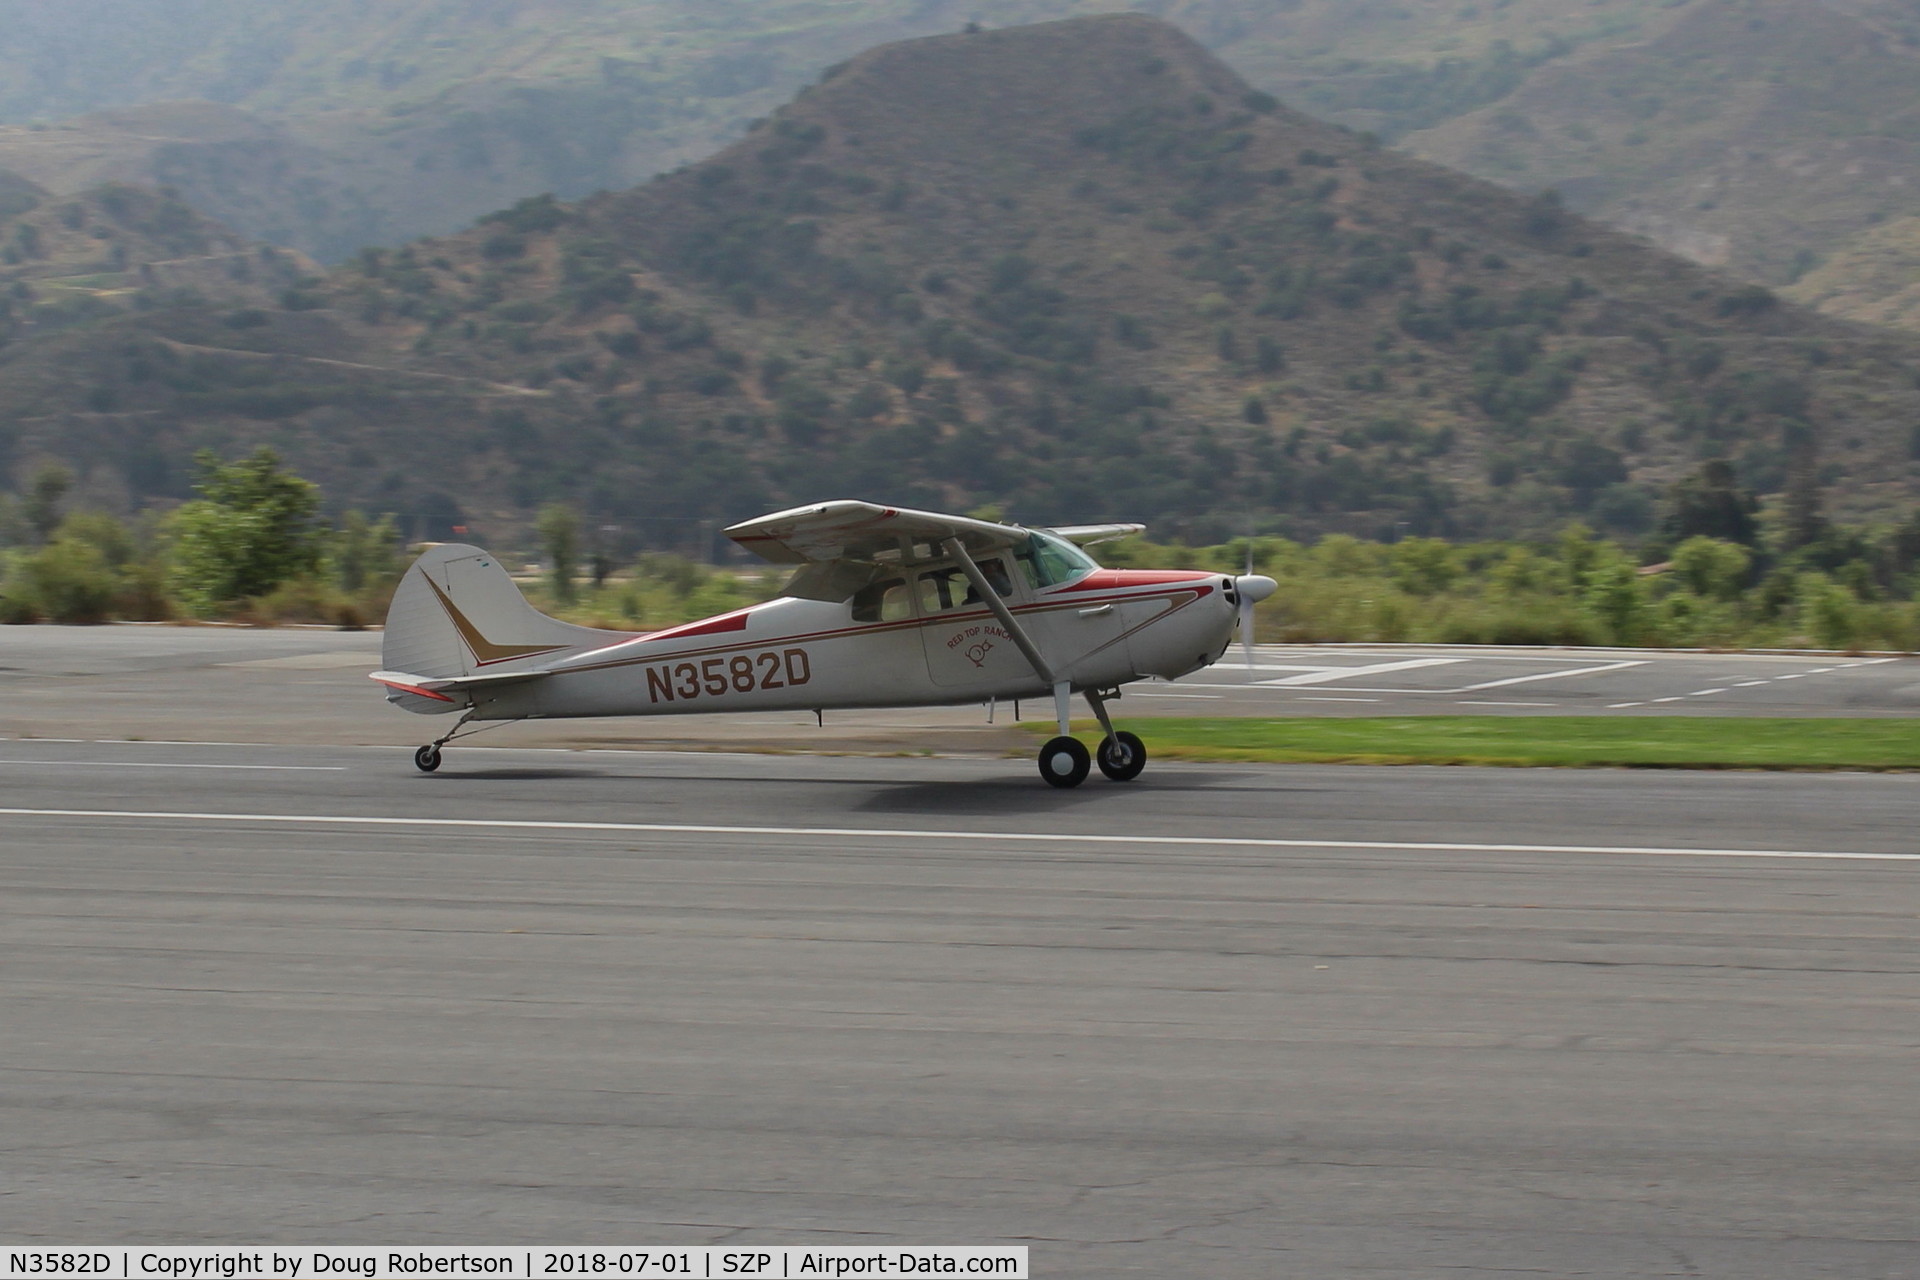 N3582D, 1956 Cessna 170B C/N 27125, 1956 Cessna 170B, Continental 0-300 145 Hp, landing roll Rwy 22